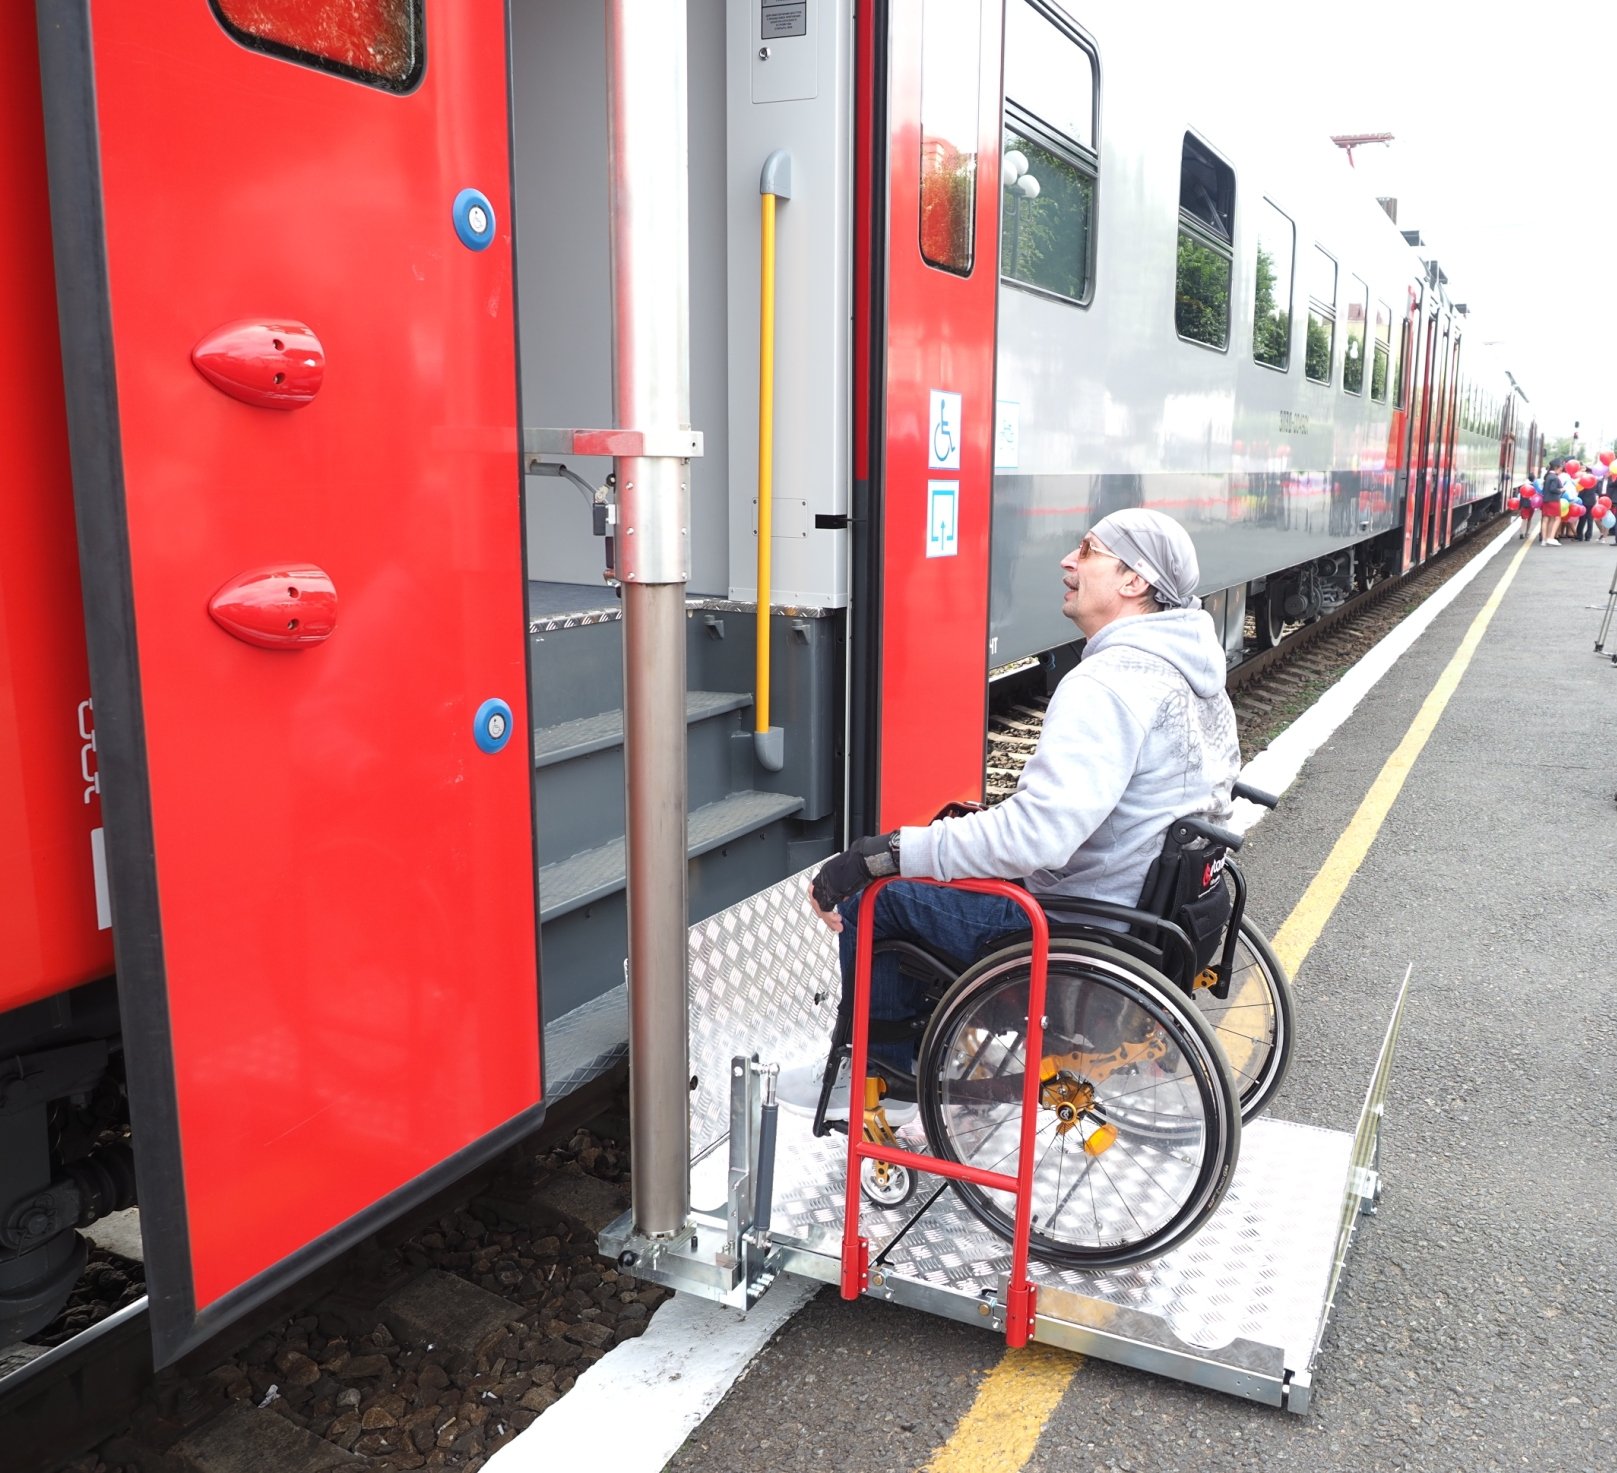 Купить места для инвалидов в поезде. Купе для инвалидов РЖД 001. Спец вагоны РЖД для инвалидов. Маломобильные пассажиры РЖД. Спецвагон для инвалидов РЖД.